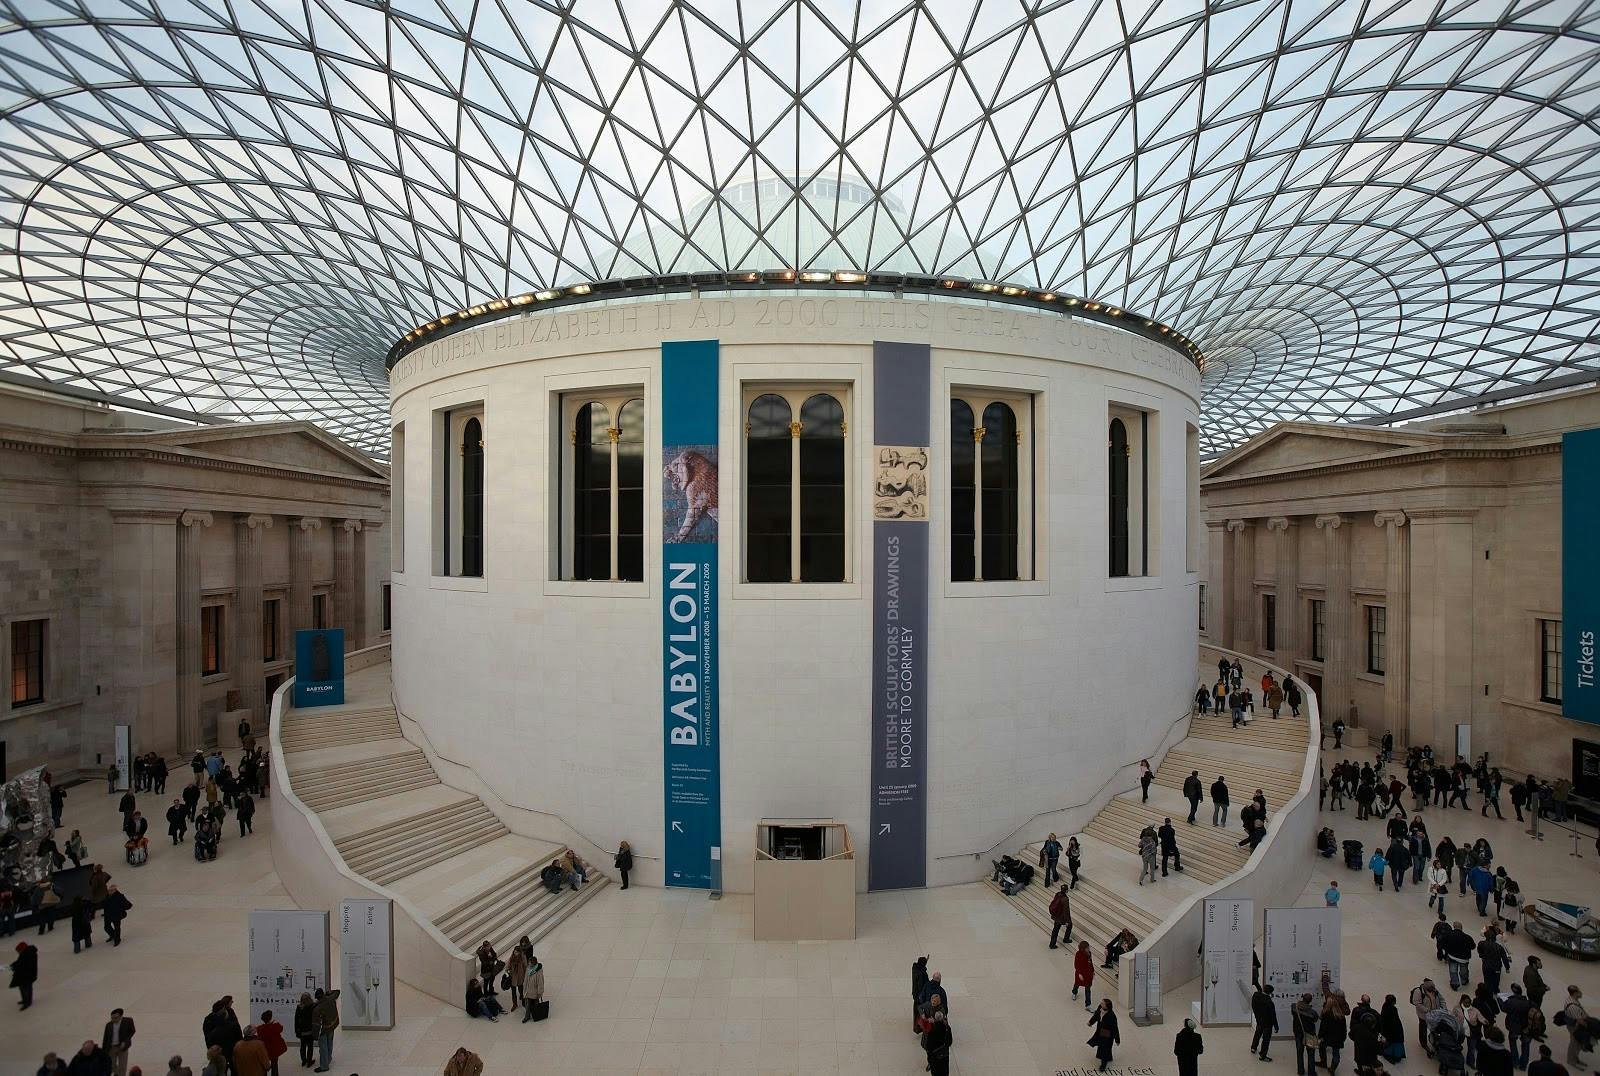 Image - The British Museum